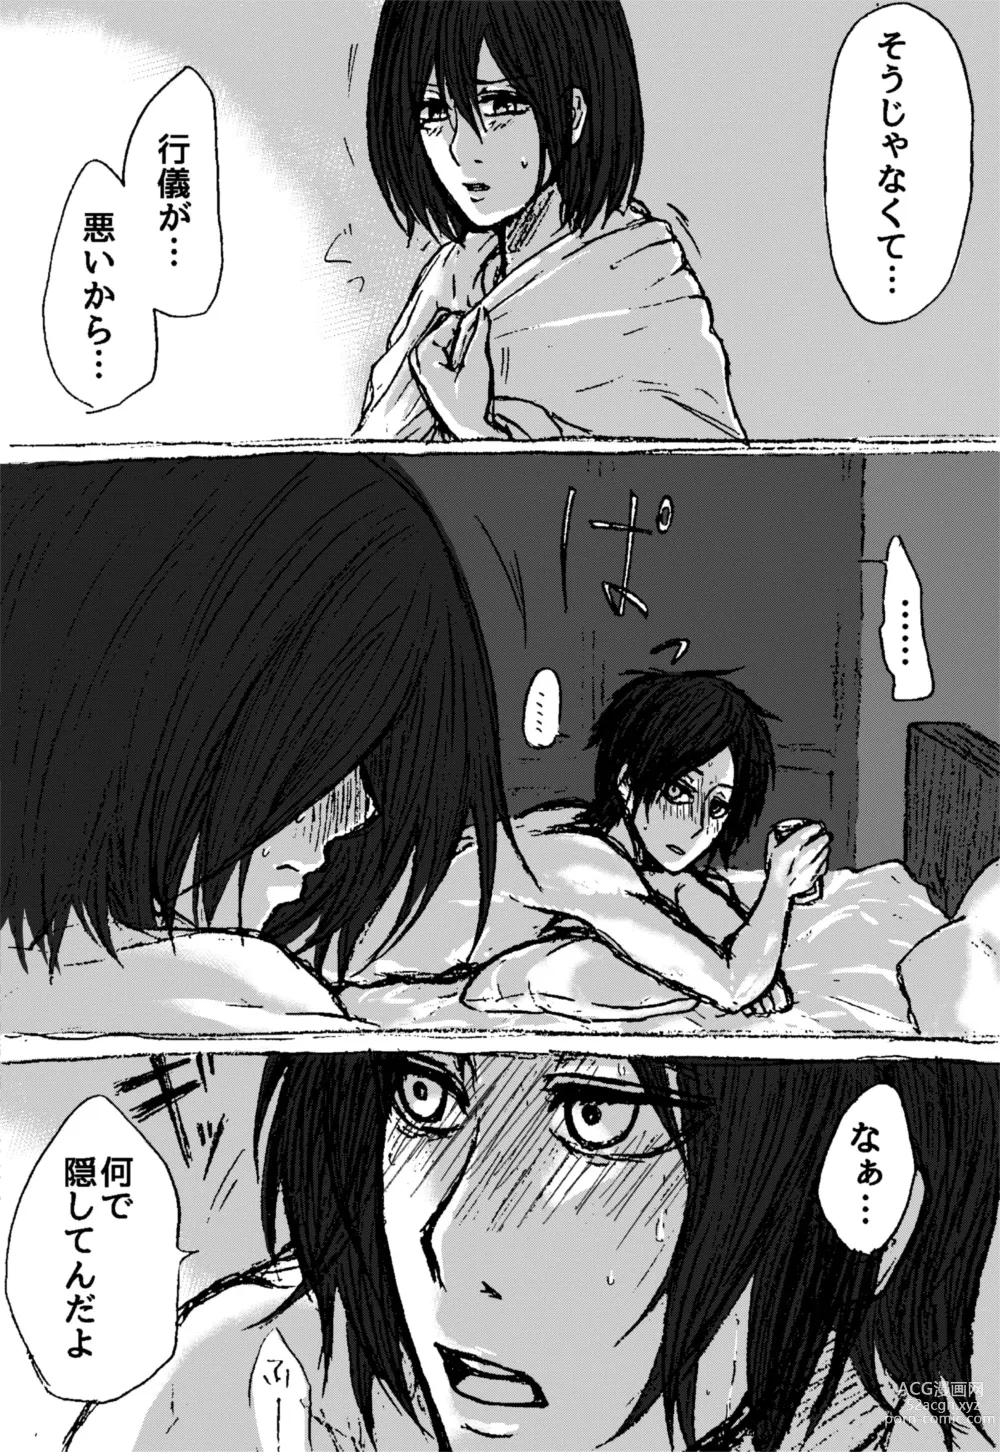 Page 3 of doujinshi Eremika Nurui R-18 Manga